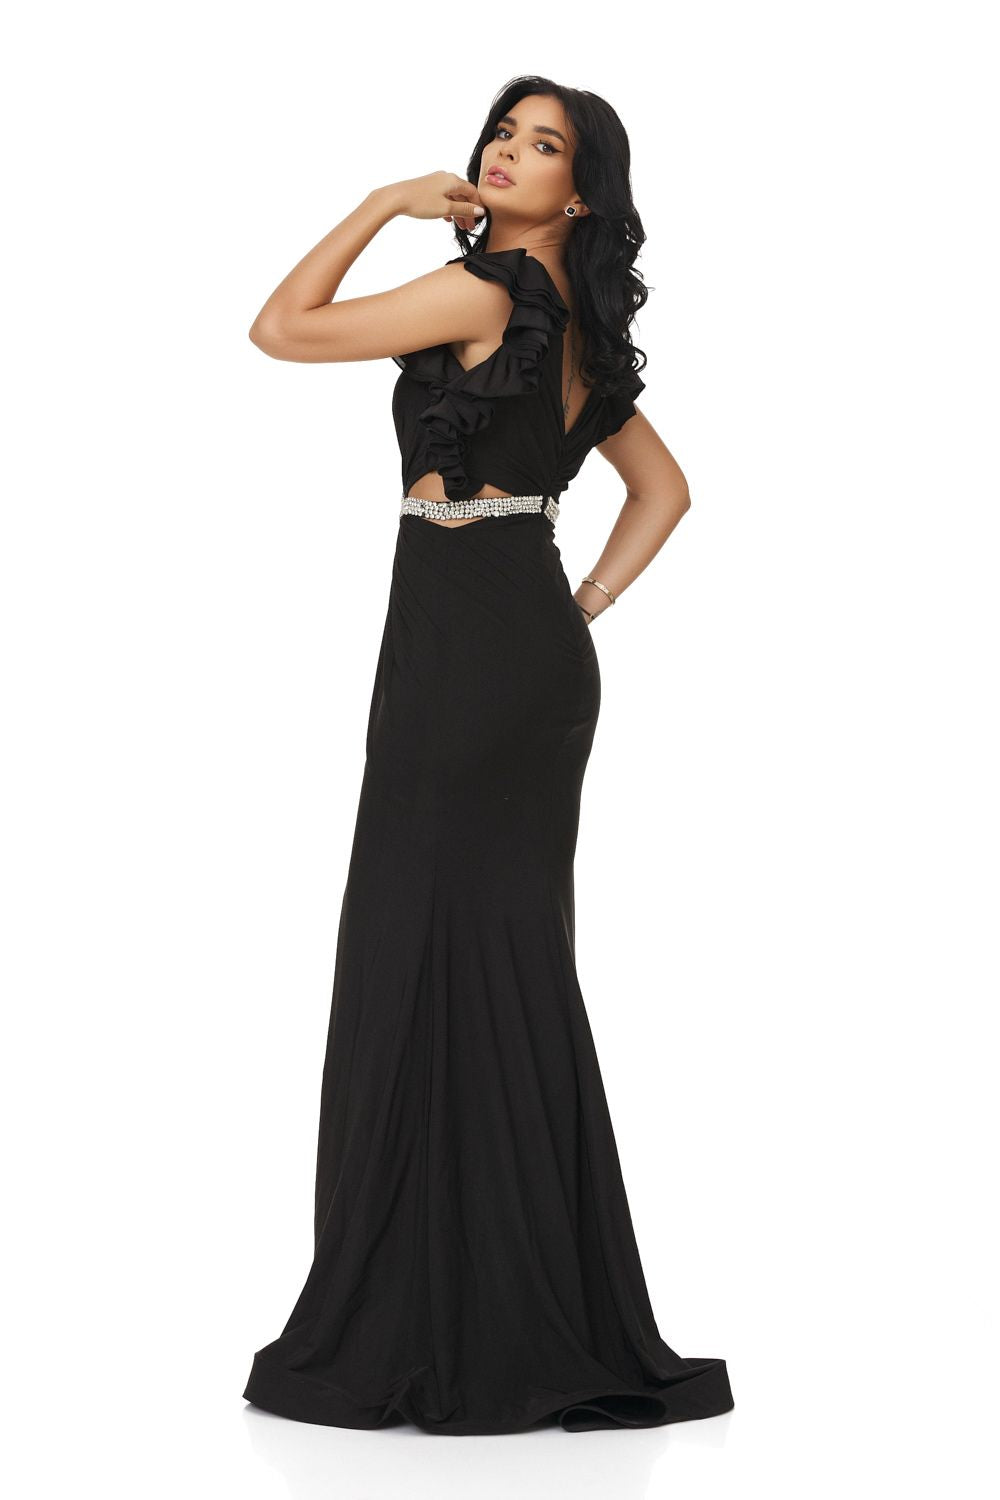 Helisay Bogas hosszú fekete női ruha